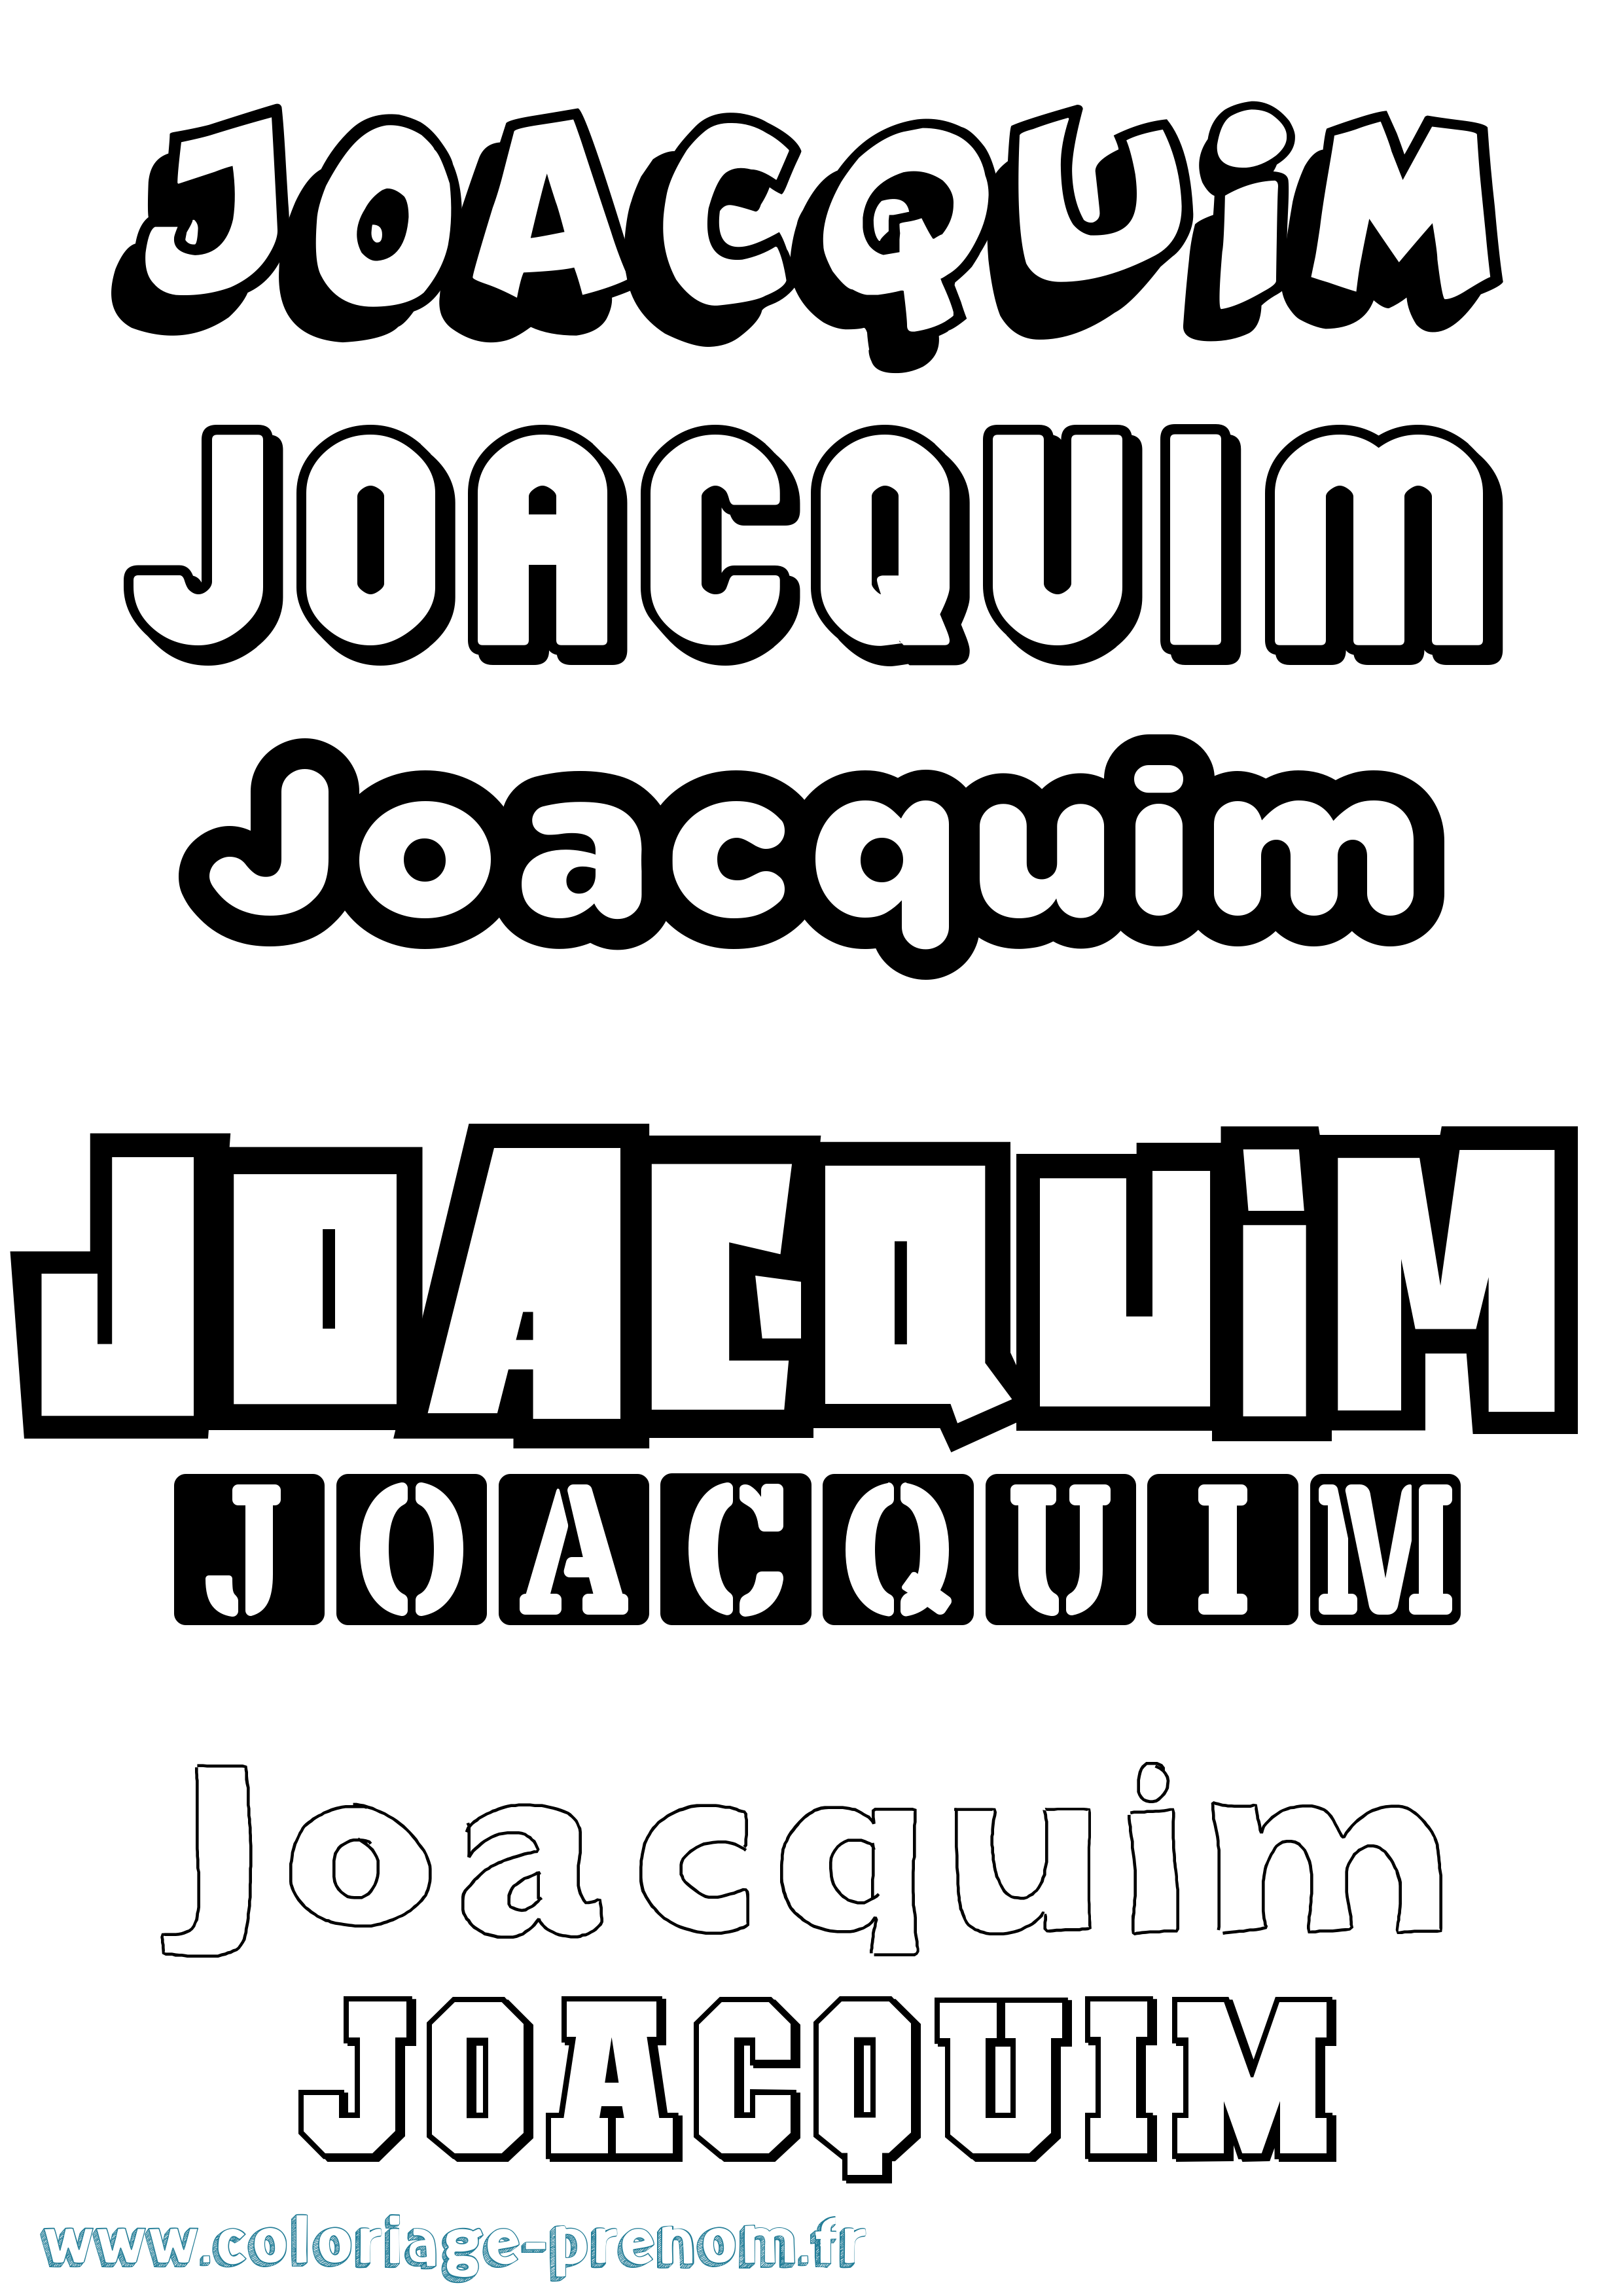 Coloriage prénom Joacquim Simple